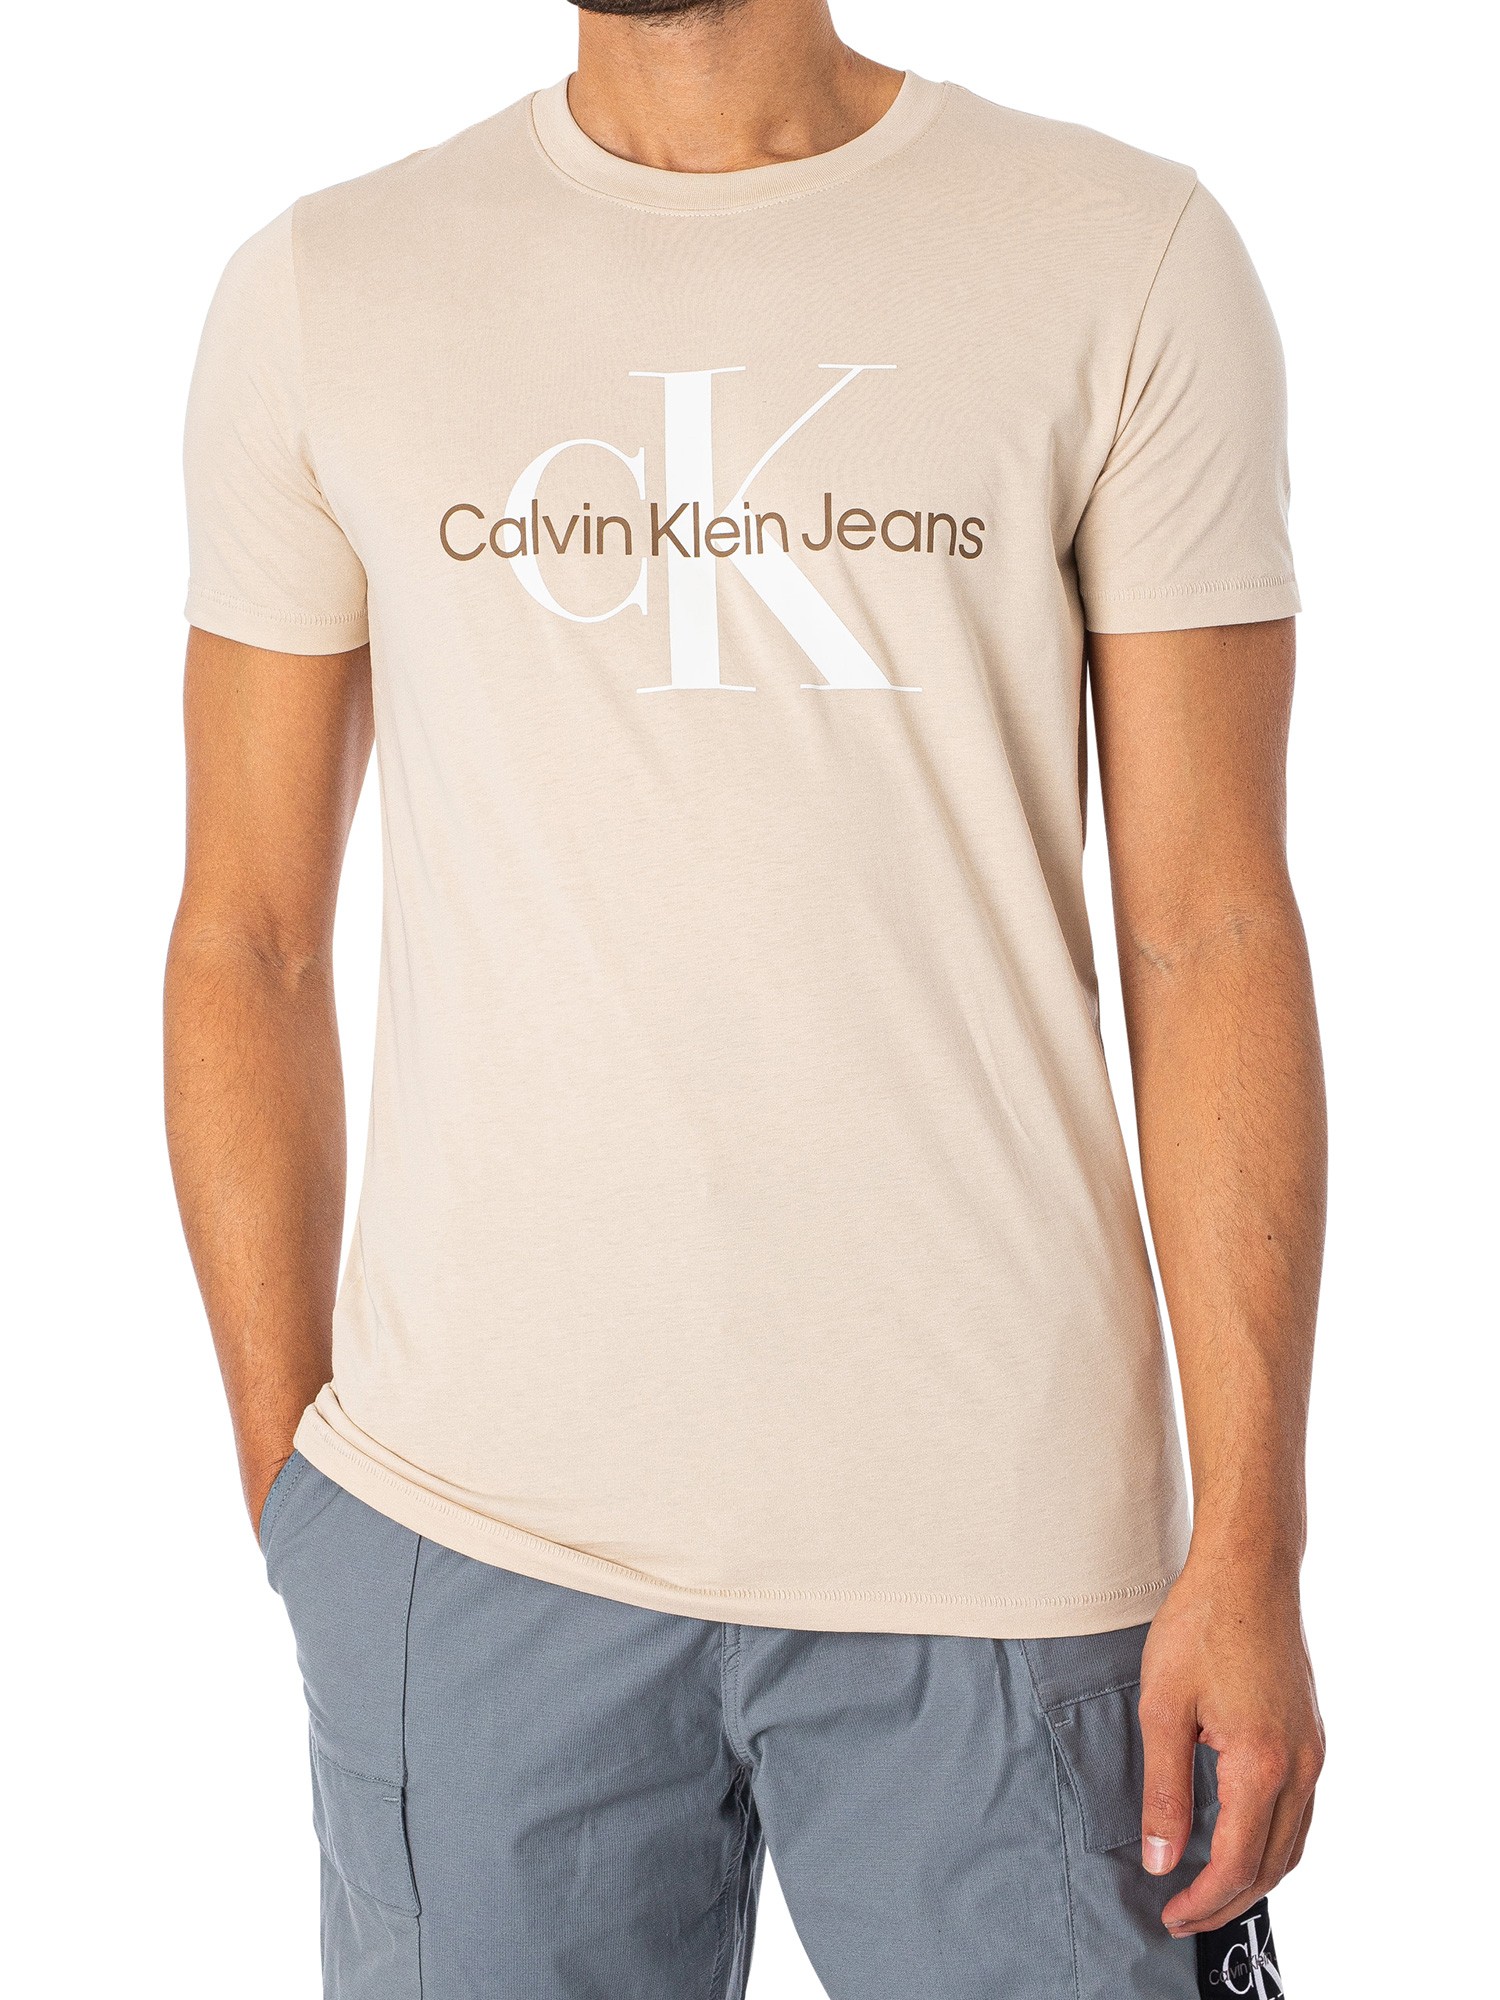 Calvin Klein Jeans Seasonal Monologo T-Shirt - Classic Beige | Standout